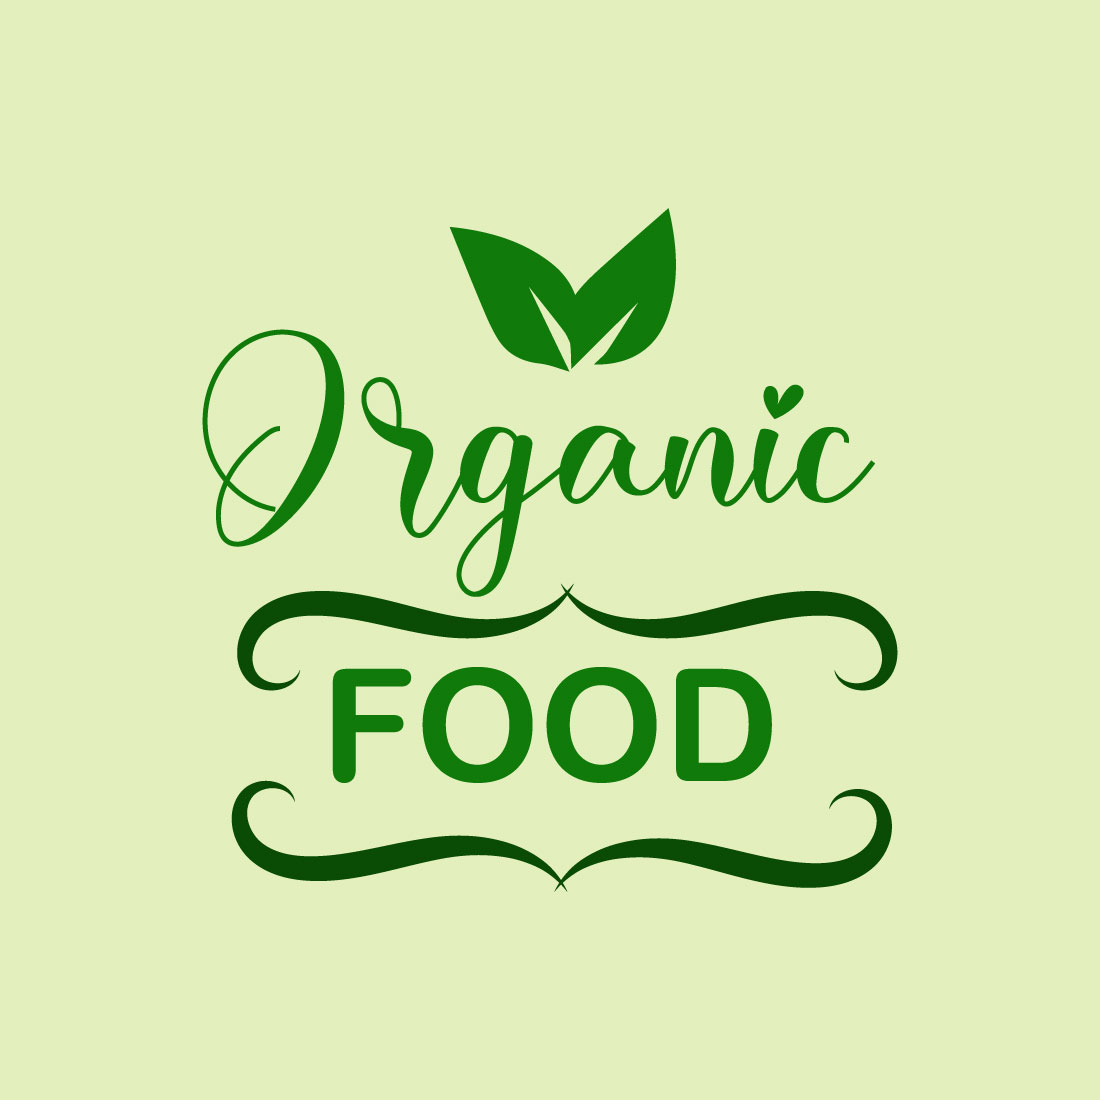 Free Organic food logo preview image.